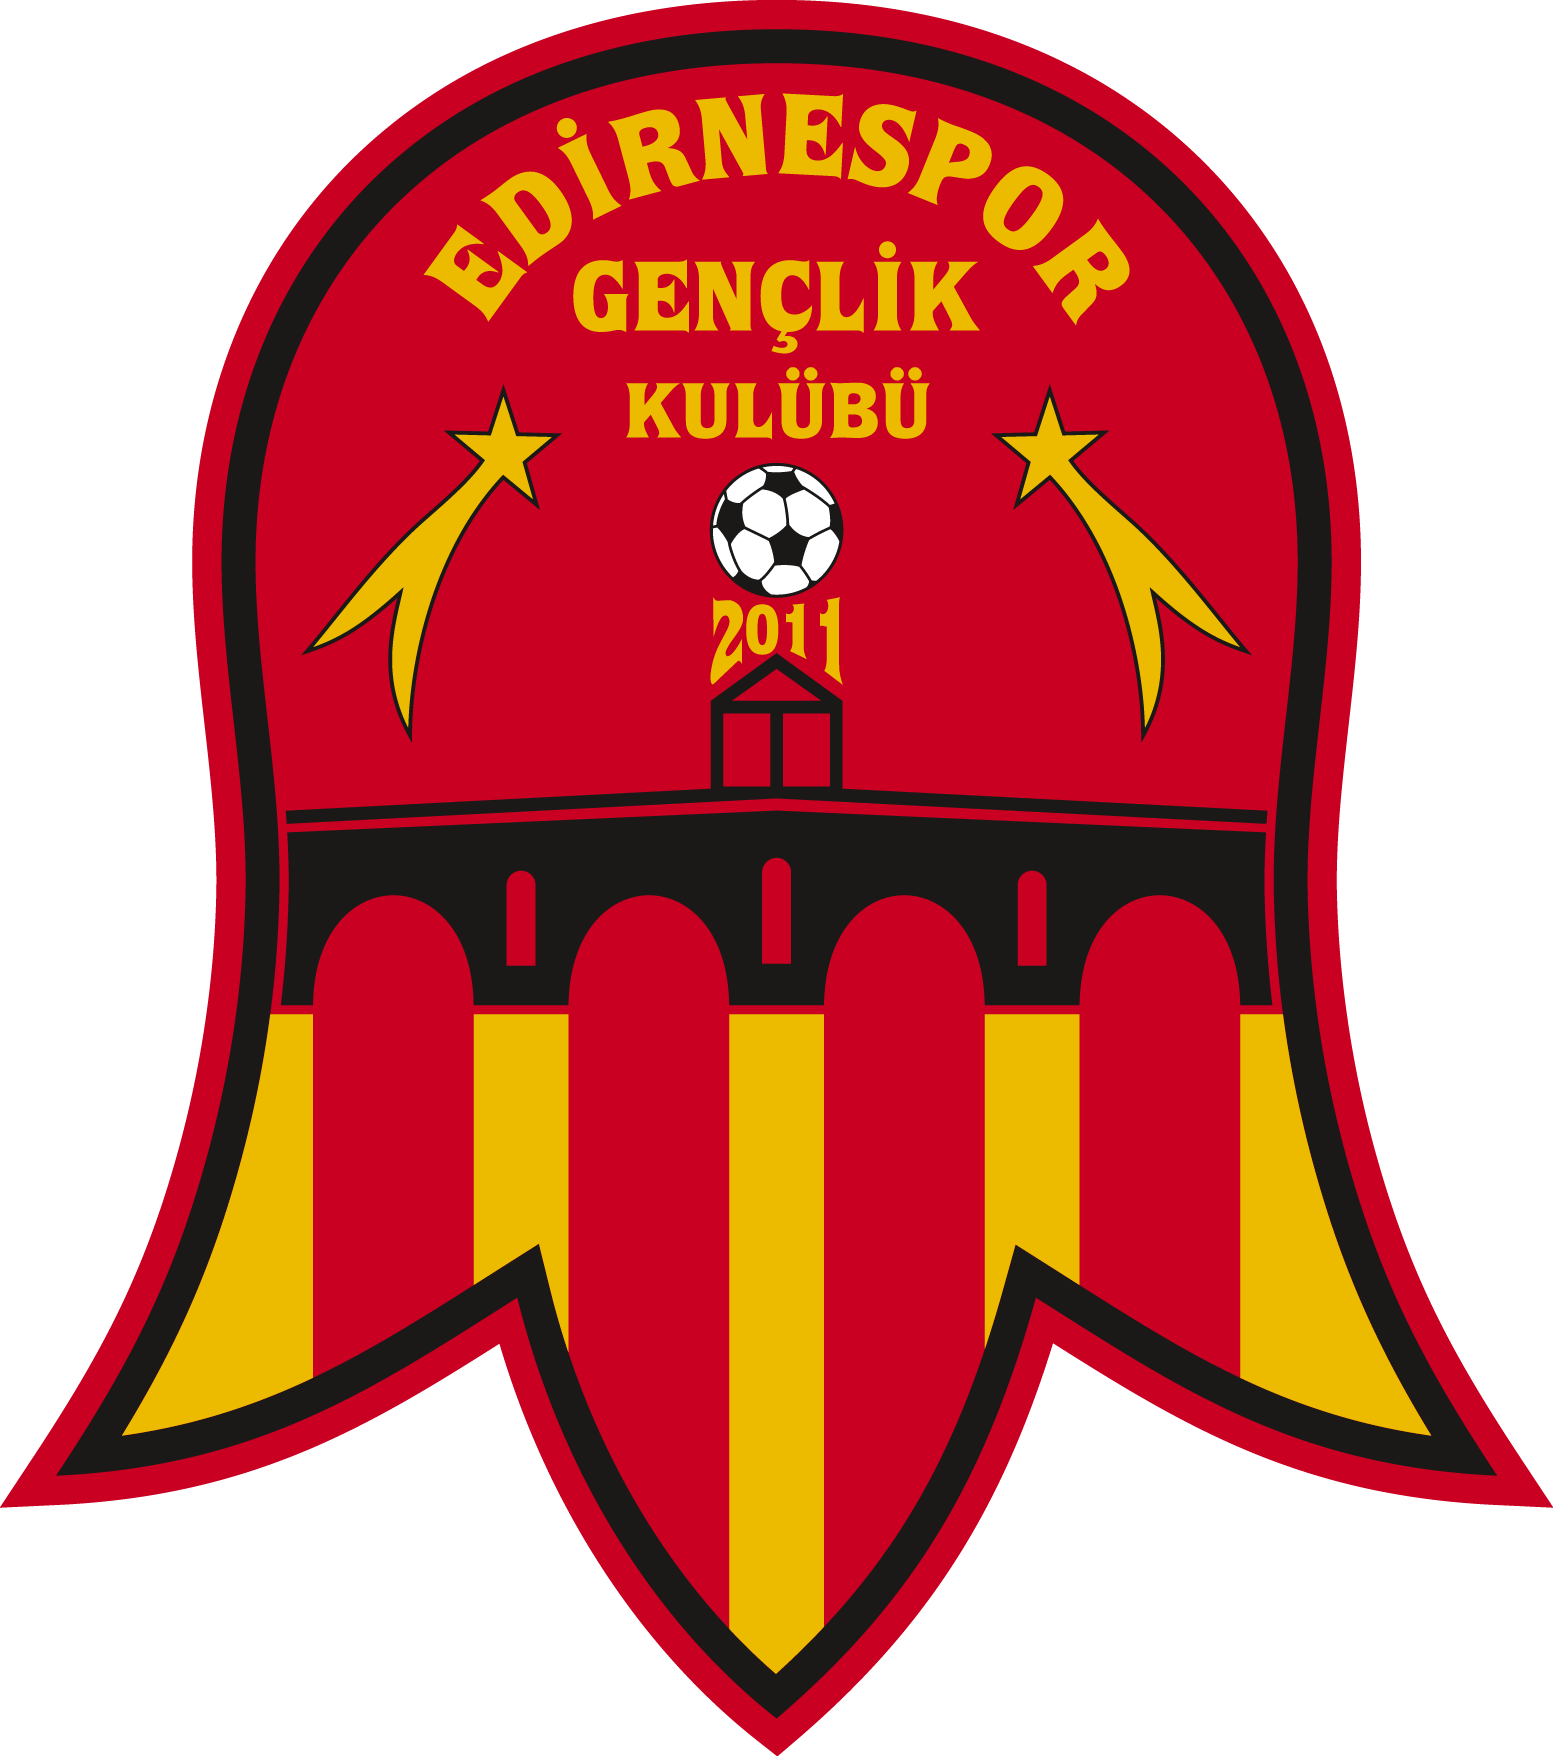 Edirnespor Genclik logo